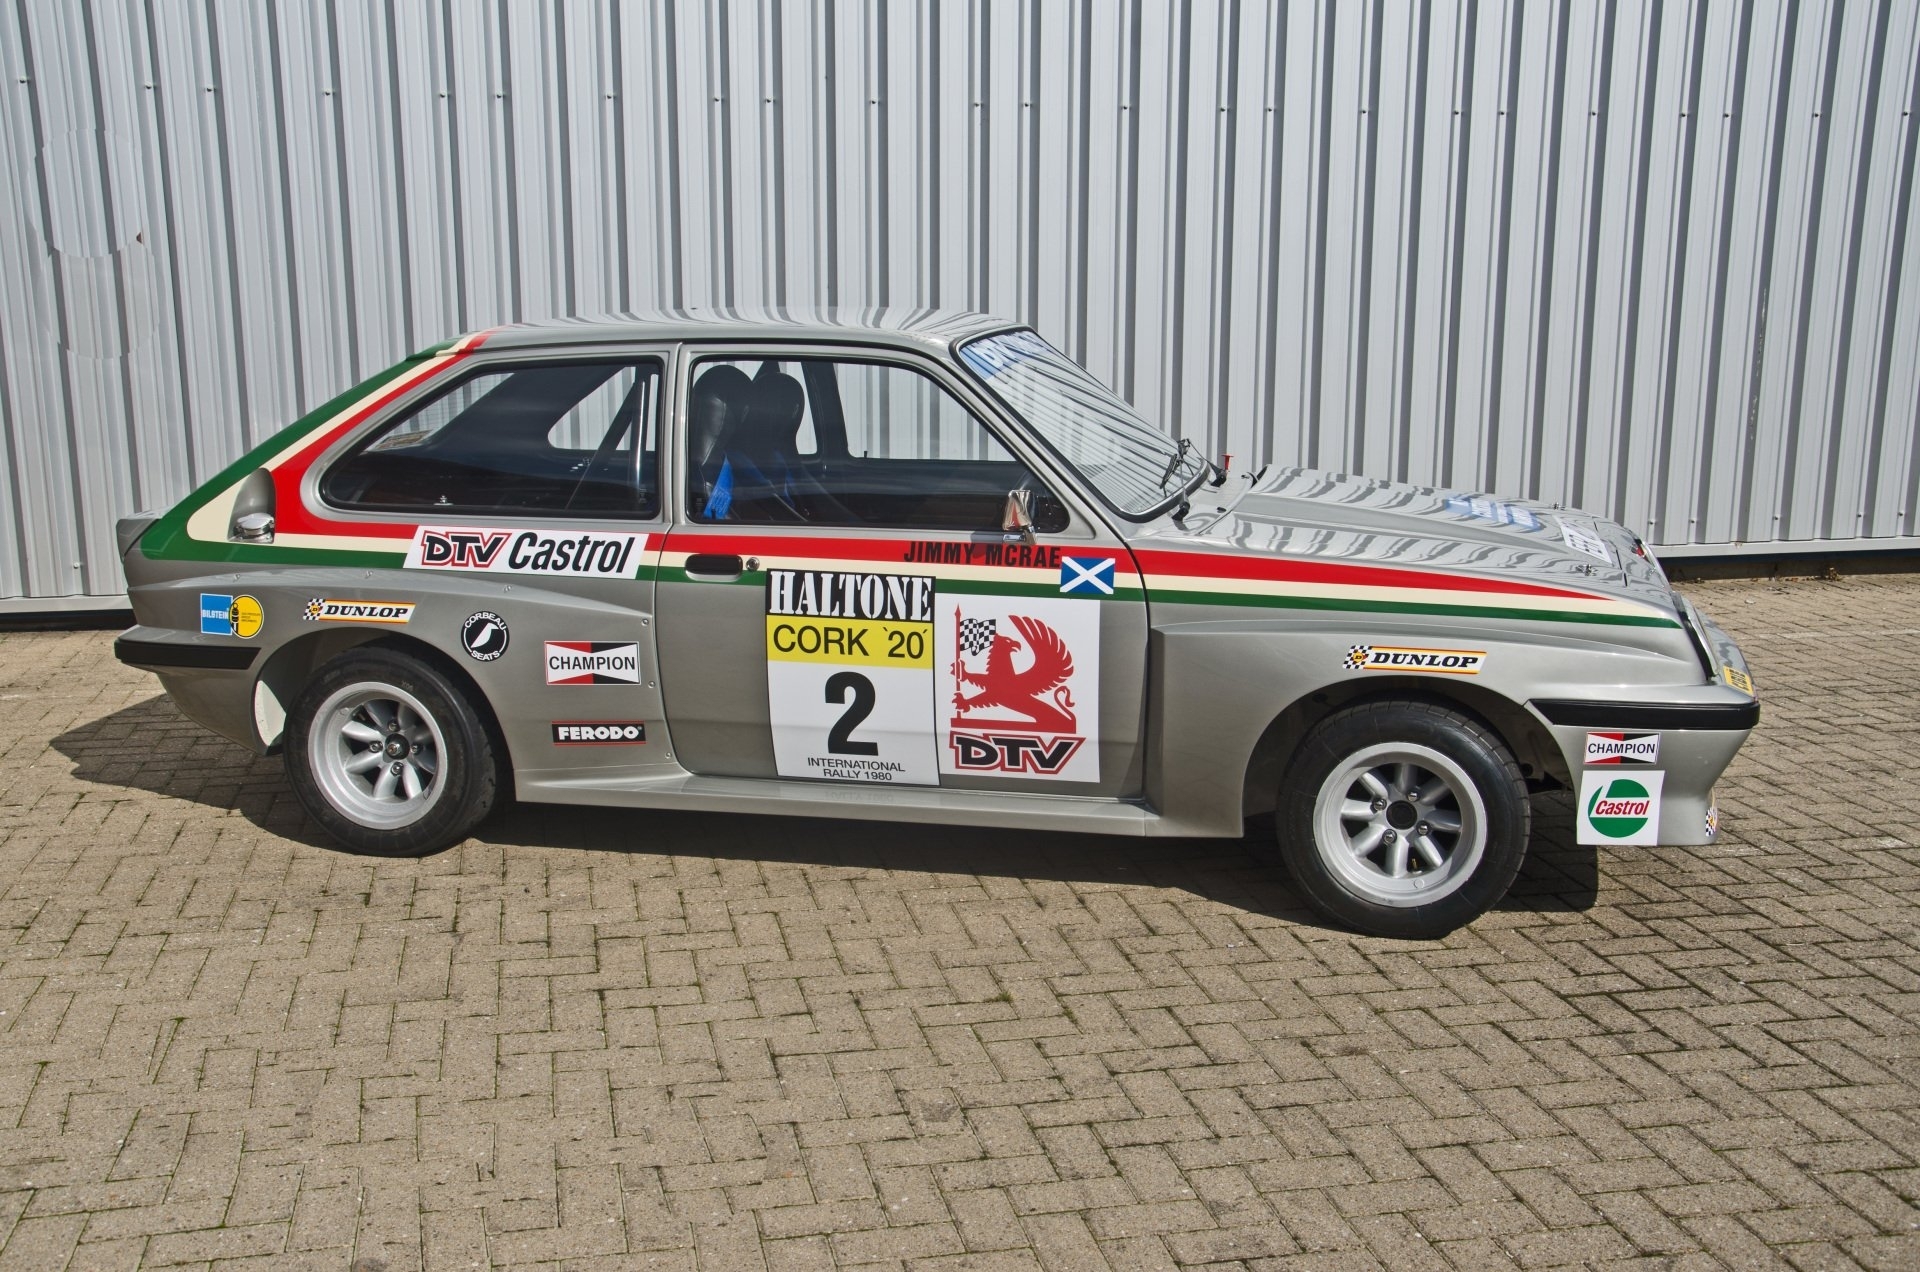 vauxhall-chevette-hsr-rally-car-32-small